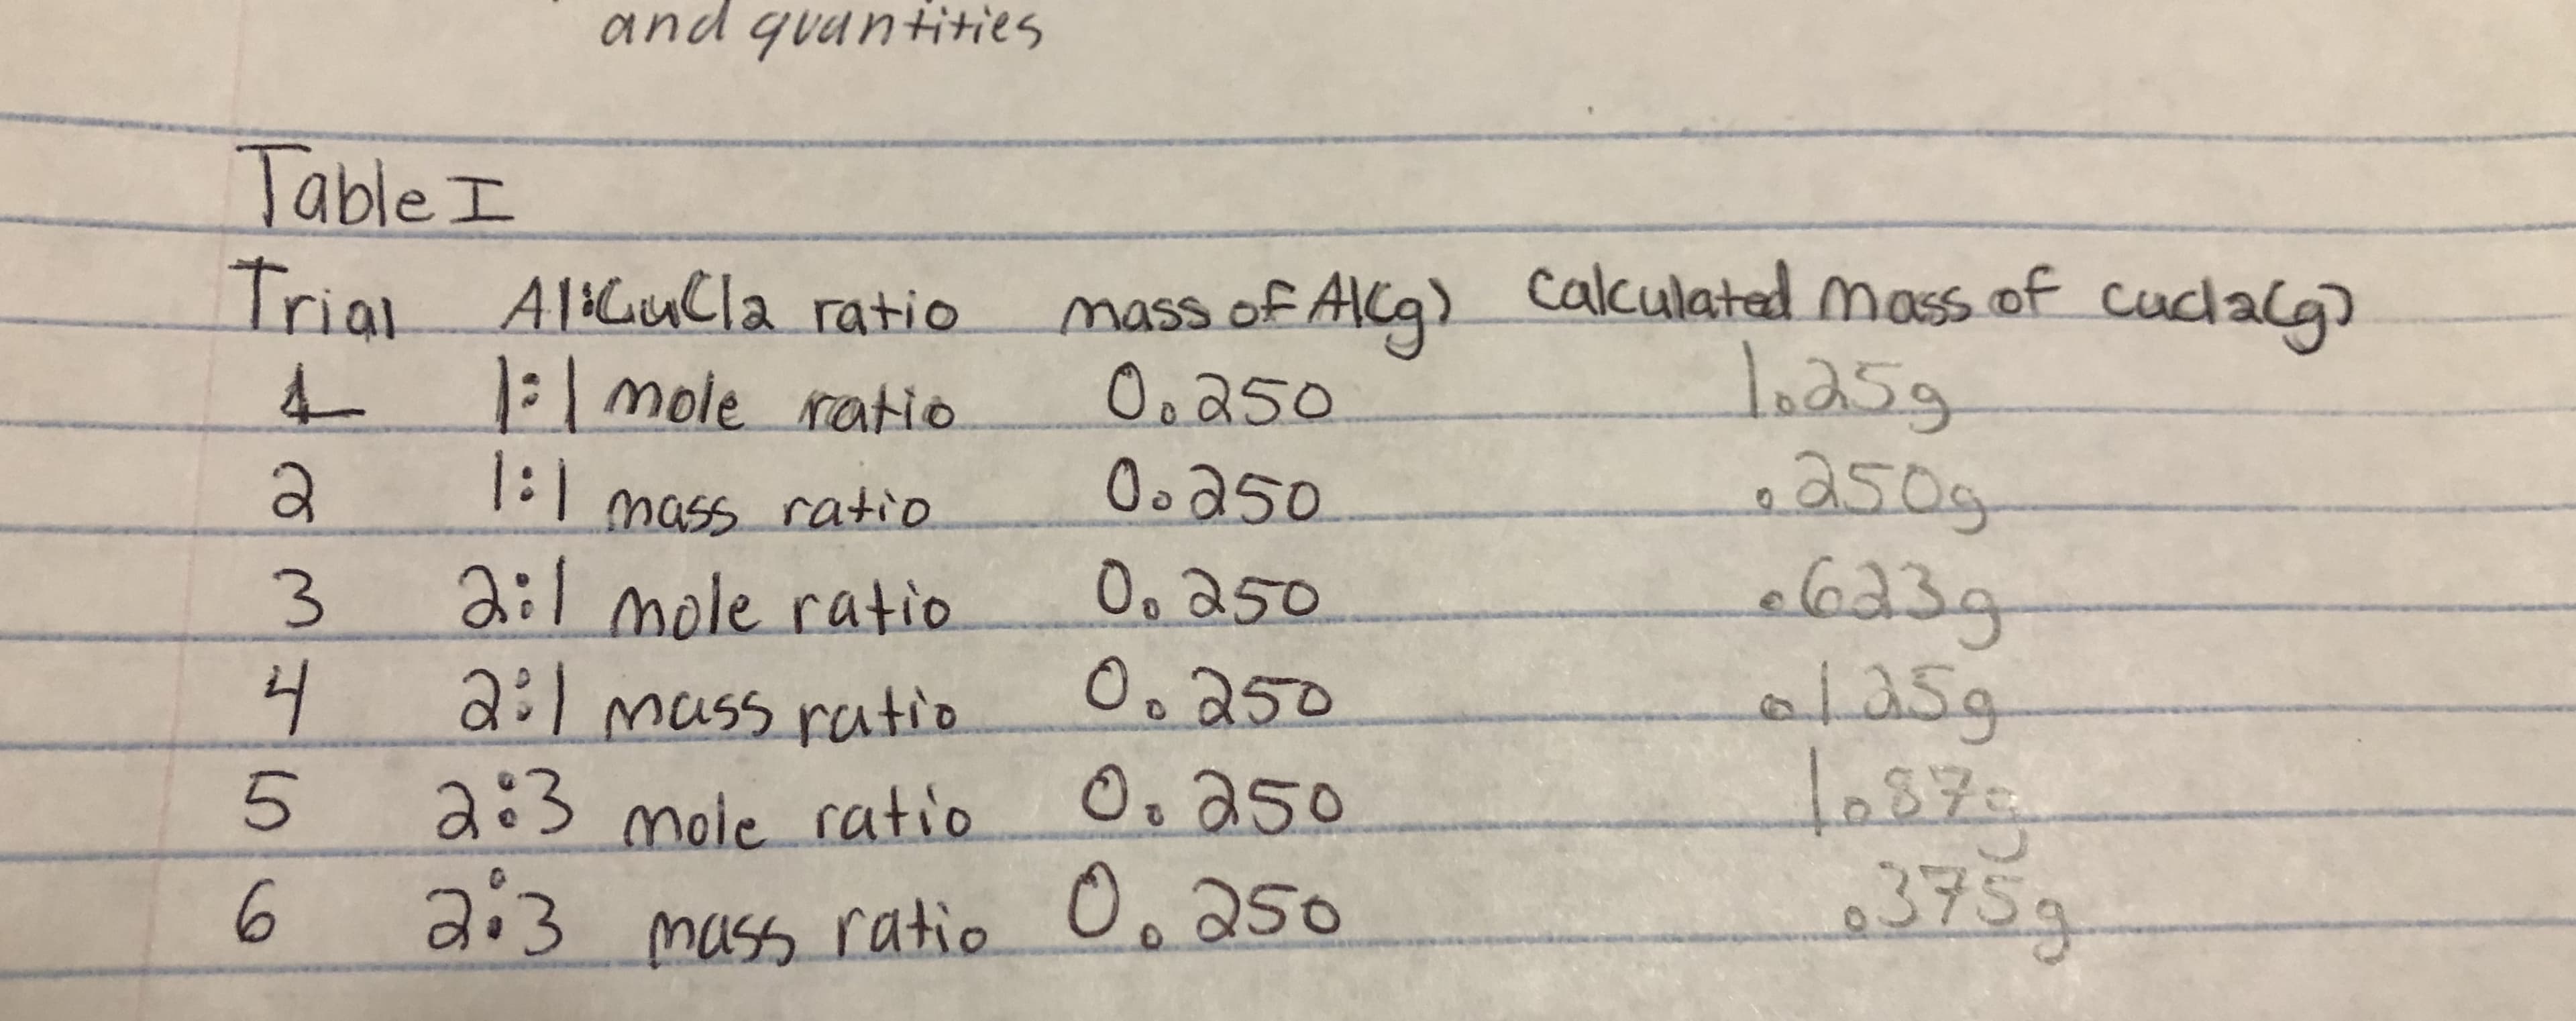 and gvantities
Table I
mass of AlCa)Calculated mass of
0.aso
0.a50
cudalg
A1ucla ratio
:mole ratio
: 1
Trial
asas
mass ratio
a:l male ratio
a:l mass ratia
0, a50
3
0.250
1४-
0, aso
a3 moie ratio
5
a.3 mash ratio
mass ratio
